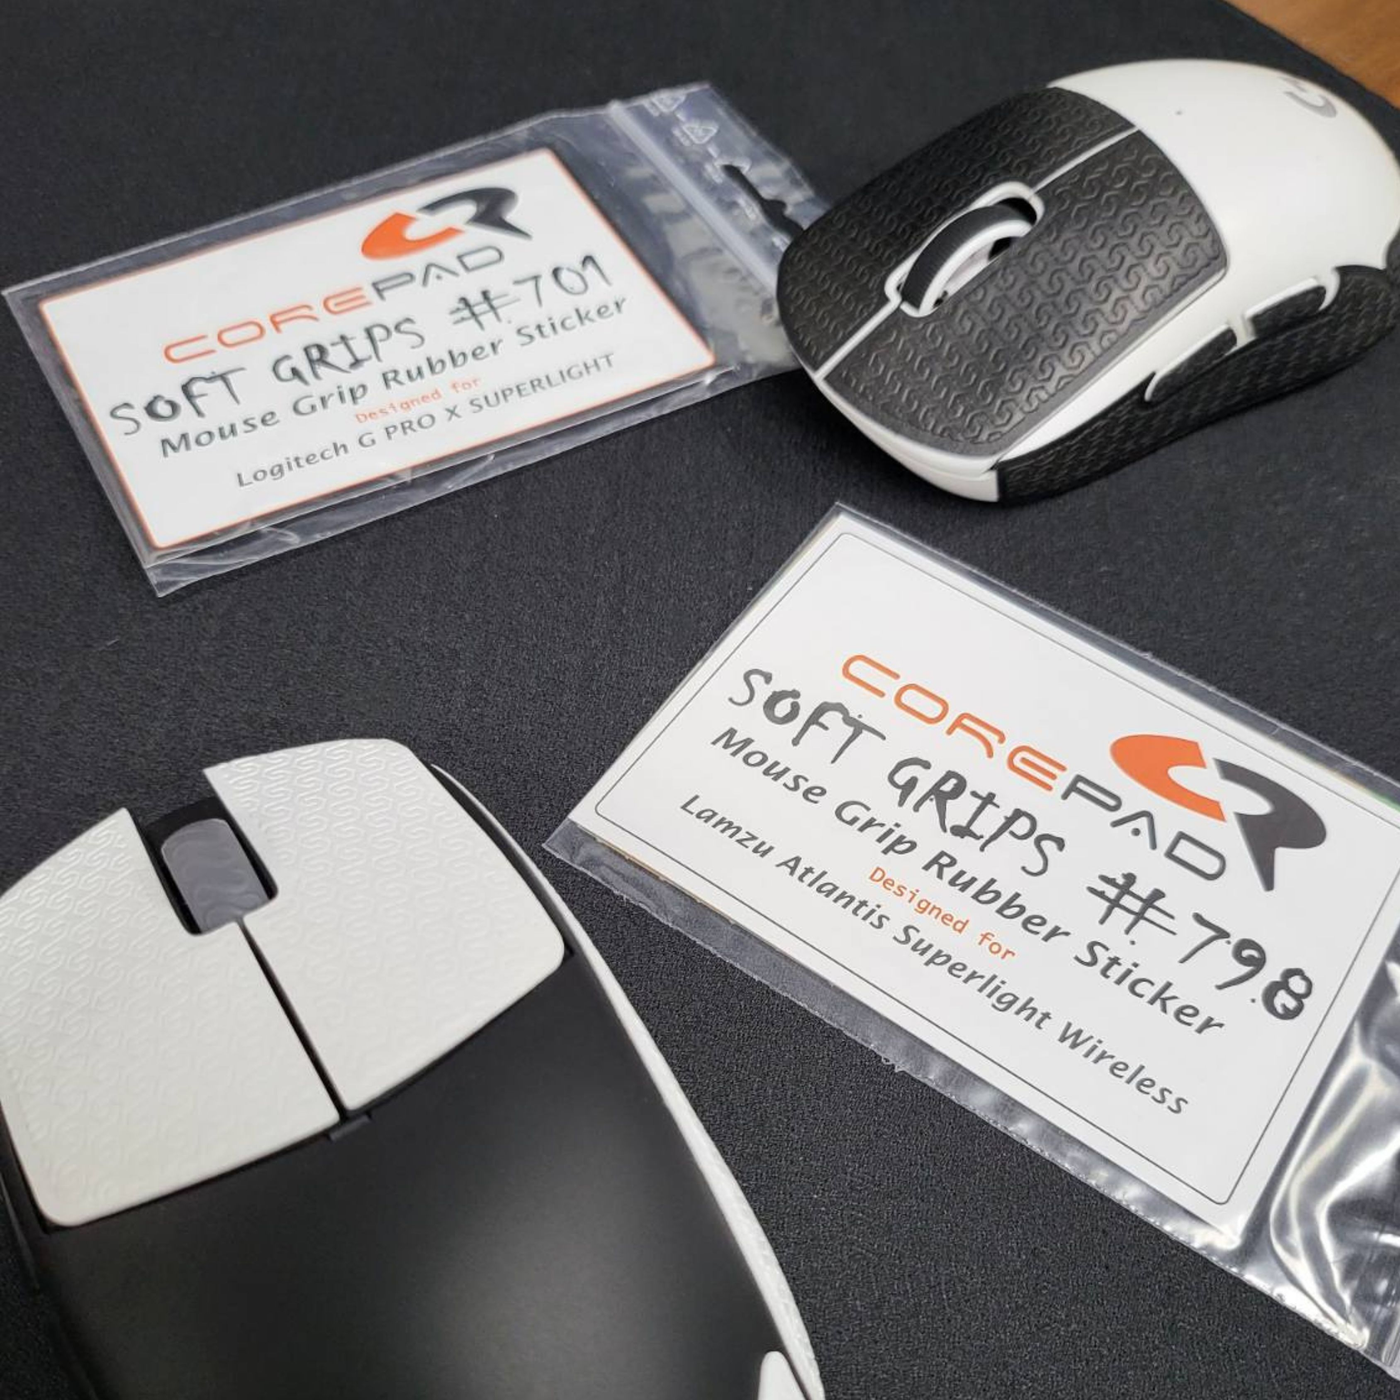 Corepads | Mouse Grips | hobbydynamics.ph